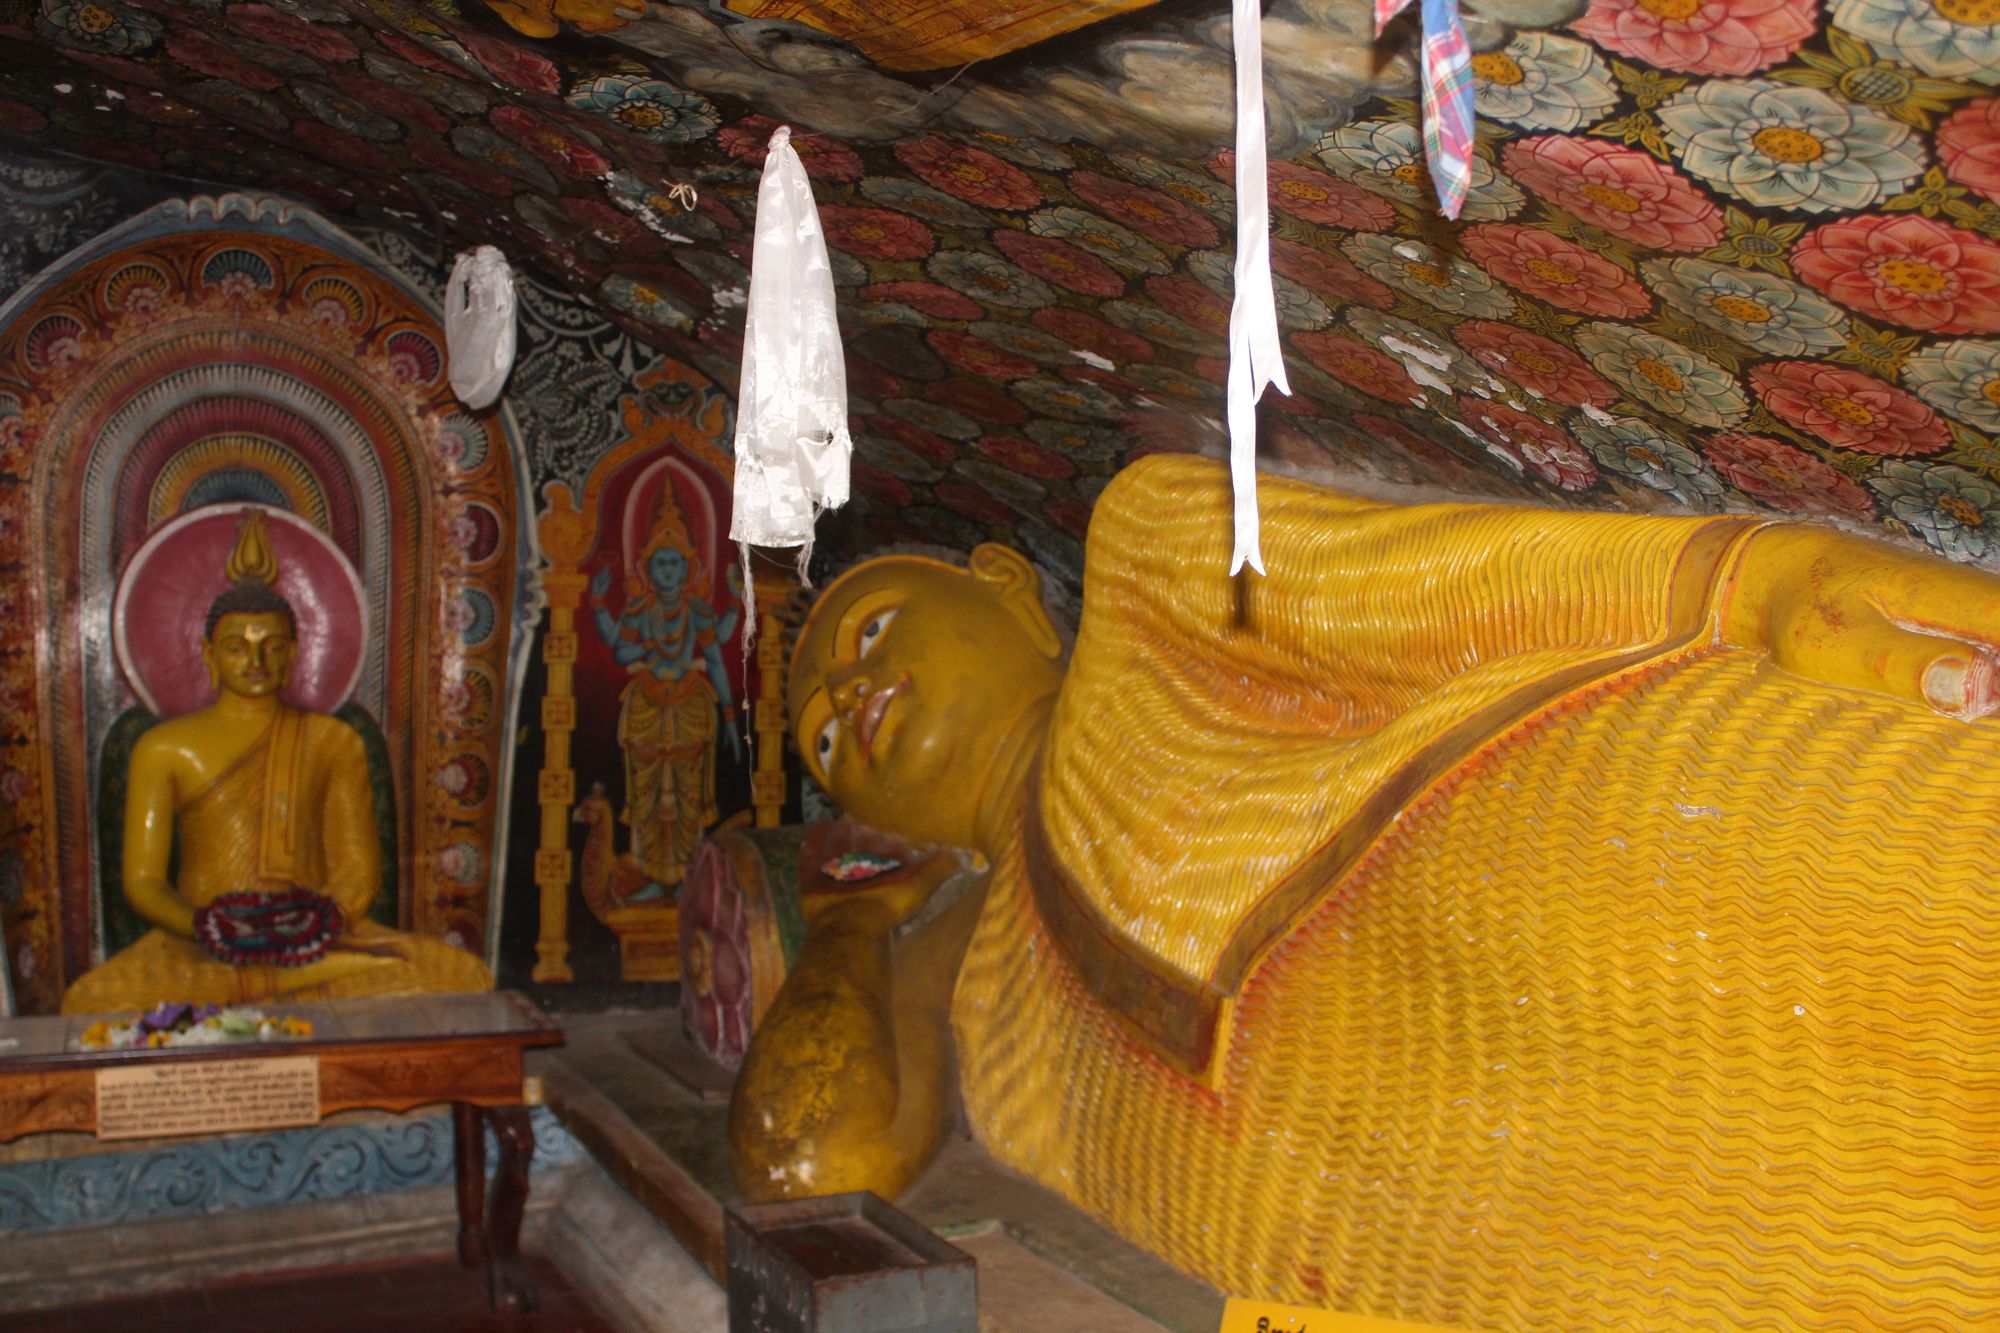 The large reclining Buddha statue in Matale Aluviharaya rock cave temple in Sri Lanka